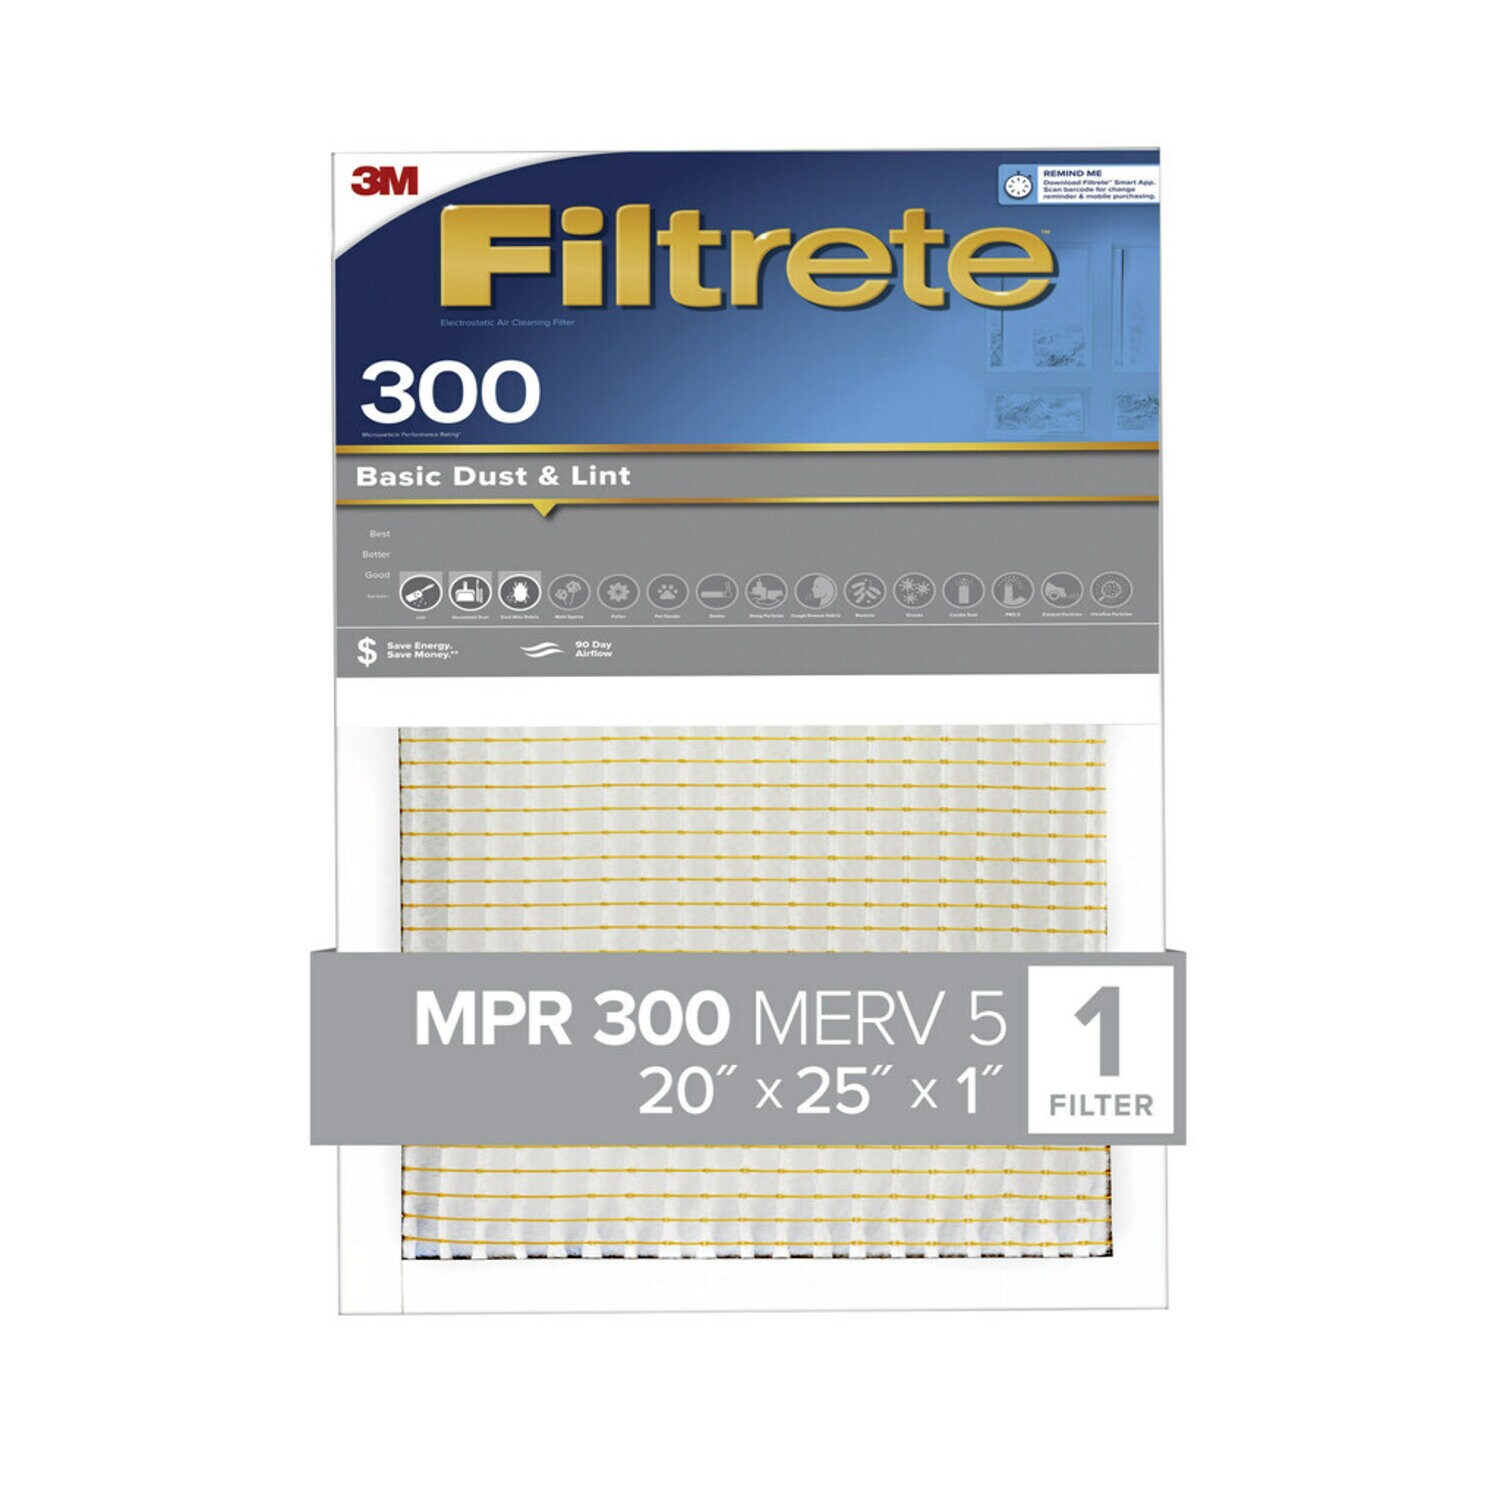 7100184246 - Filtrete Basic Dust & Lint Air Filter, 300 MPR, 303-4, 20 in x 25 in x
1 in (50.8 cm x 63.5 cm x 2.5 cm)